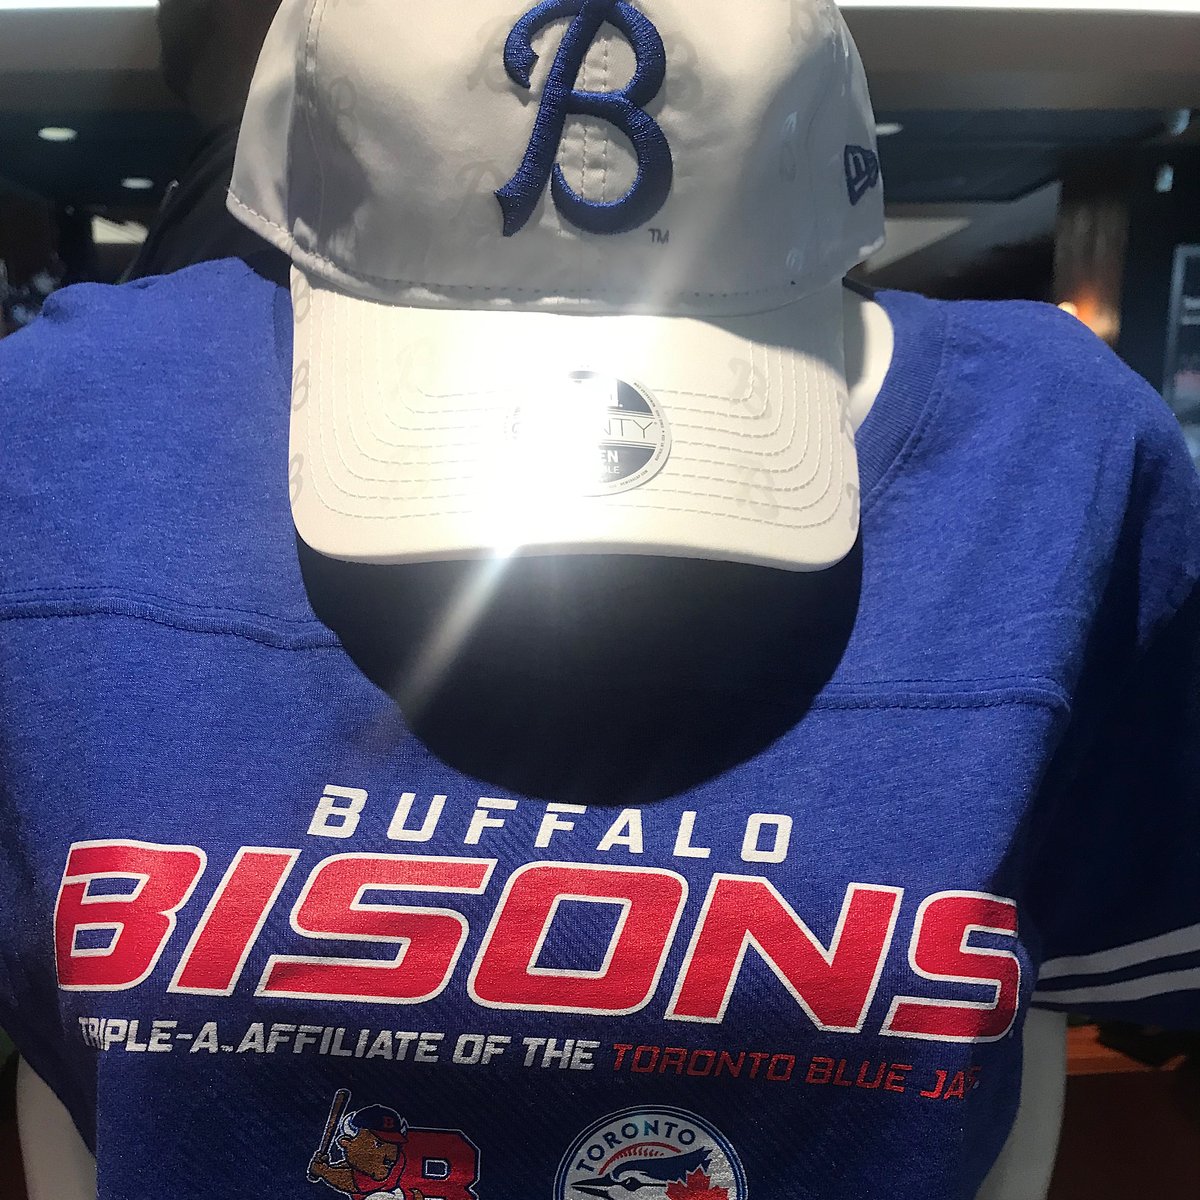 Buffalo Bisons freshen the ballpark lineup for 2019 - Buffalo Business First